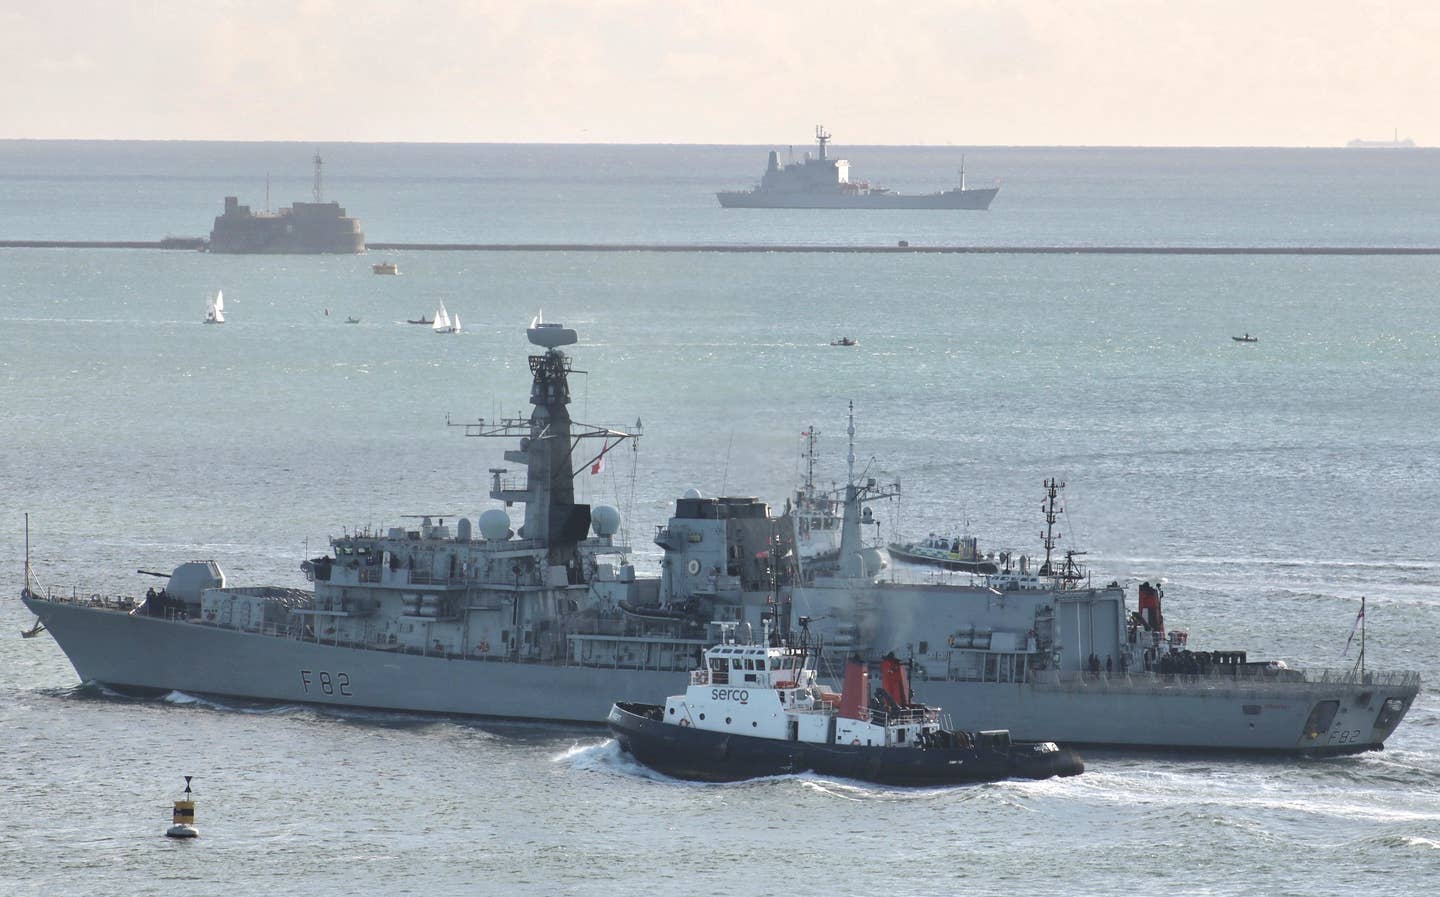 HMS <em>Somerset</em> seen leaving Devonport in October. The NSM launchers are visible, but without any missile canisters loaded on them. <em>Westward Shipping News</em>